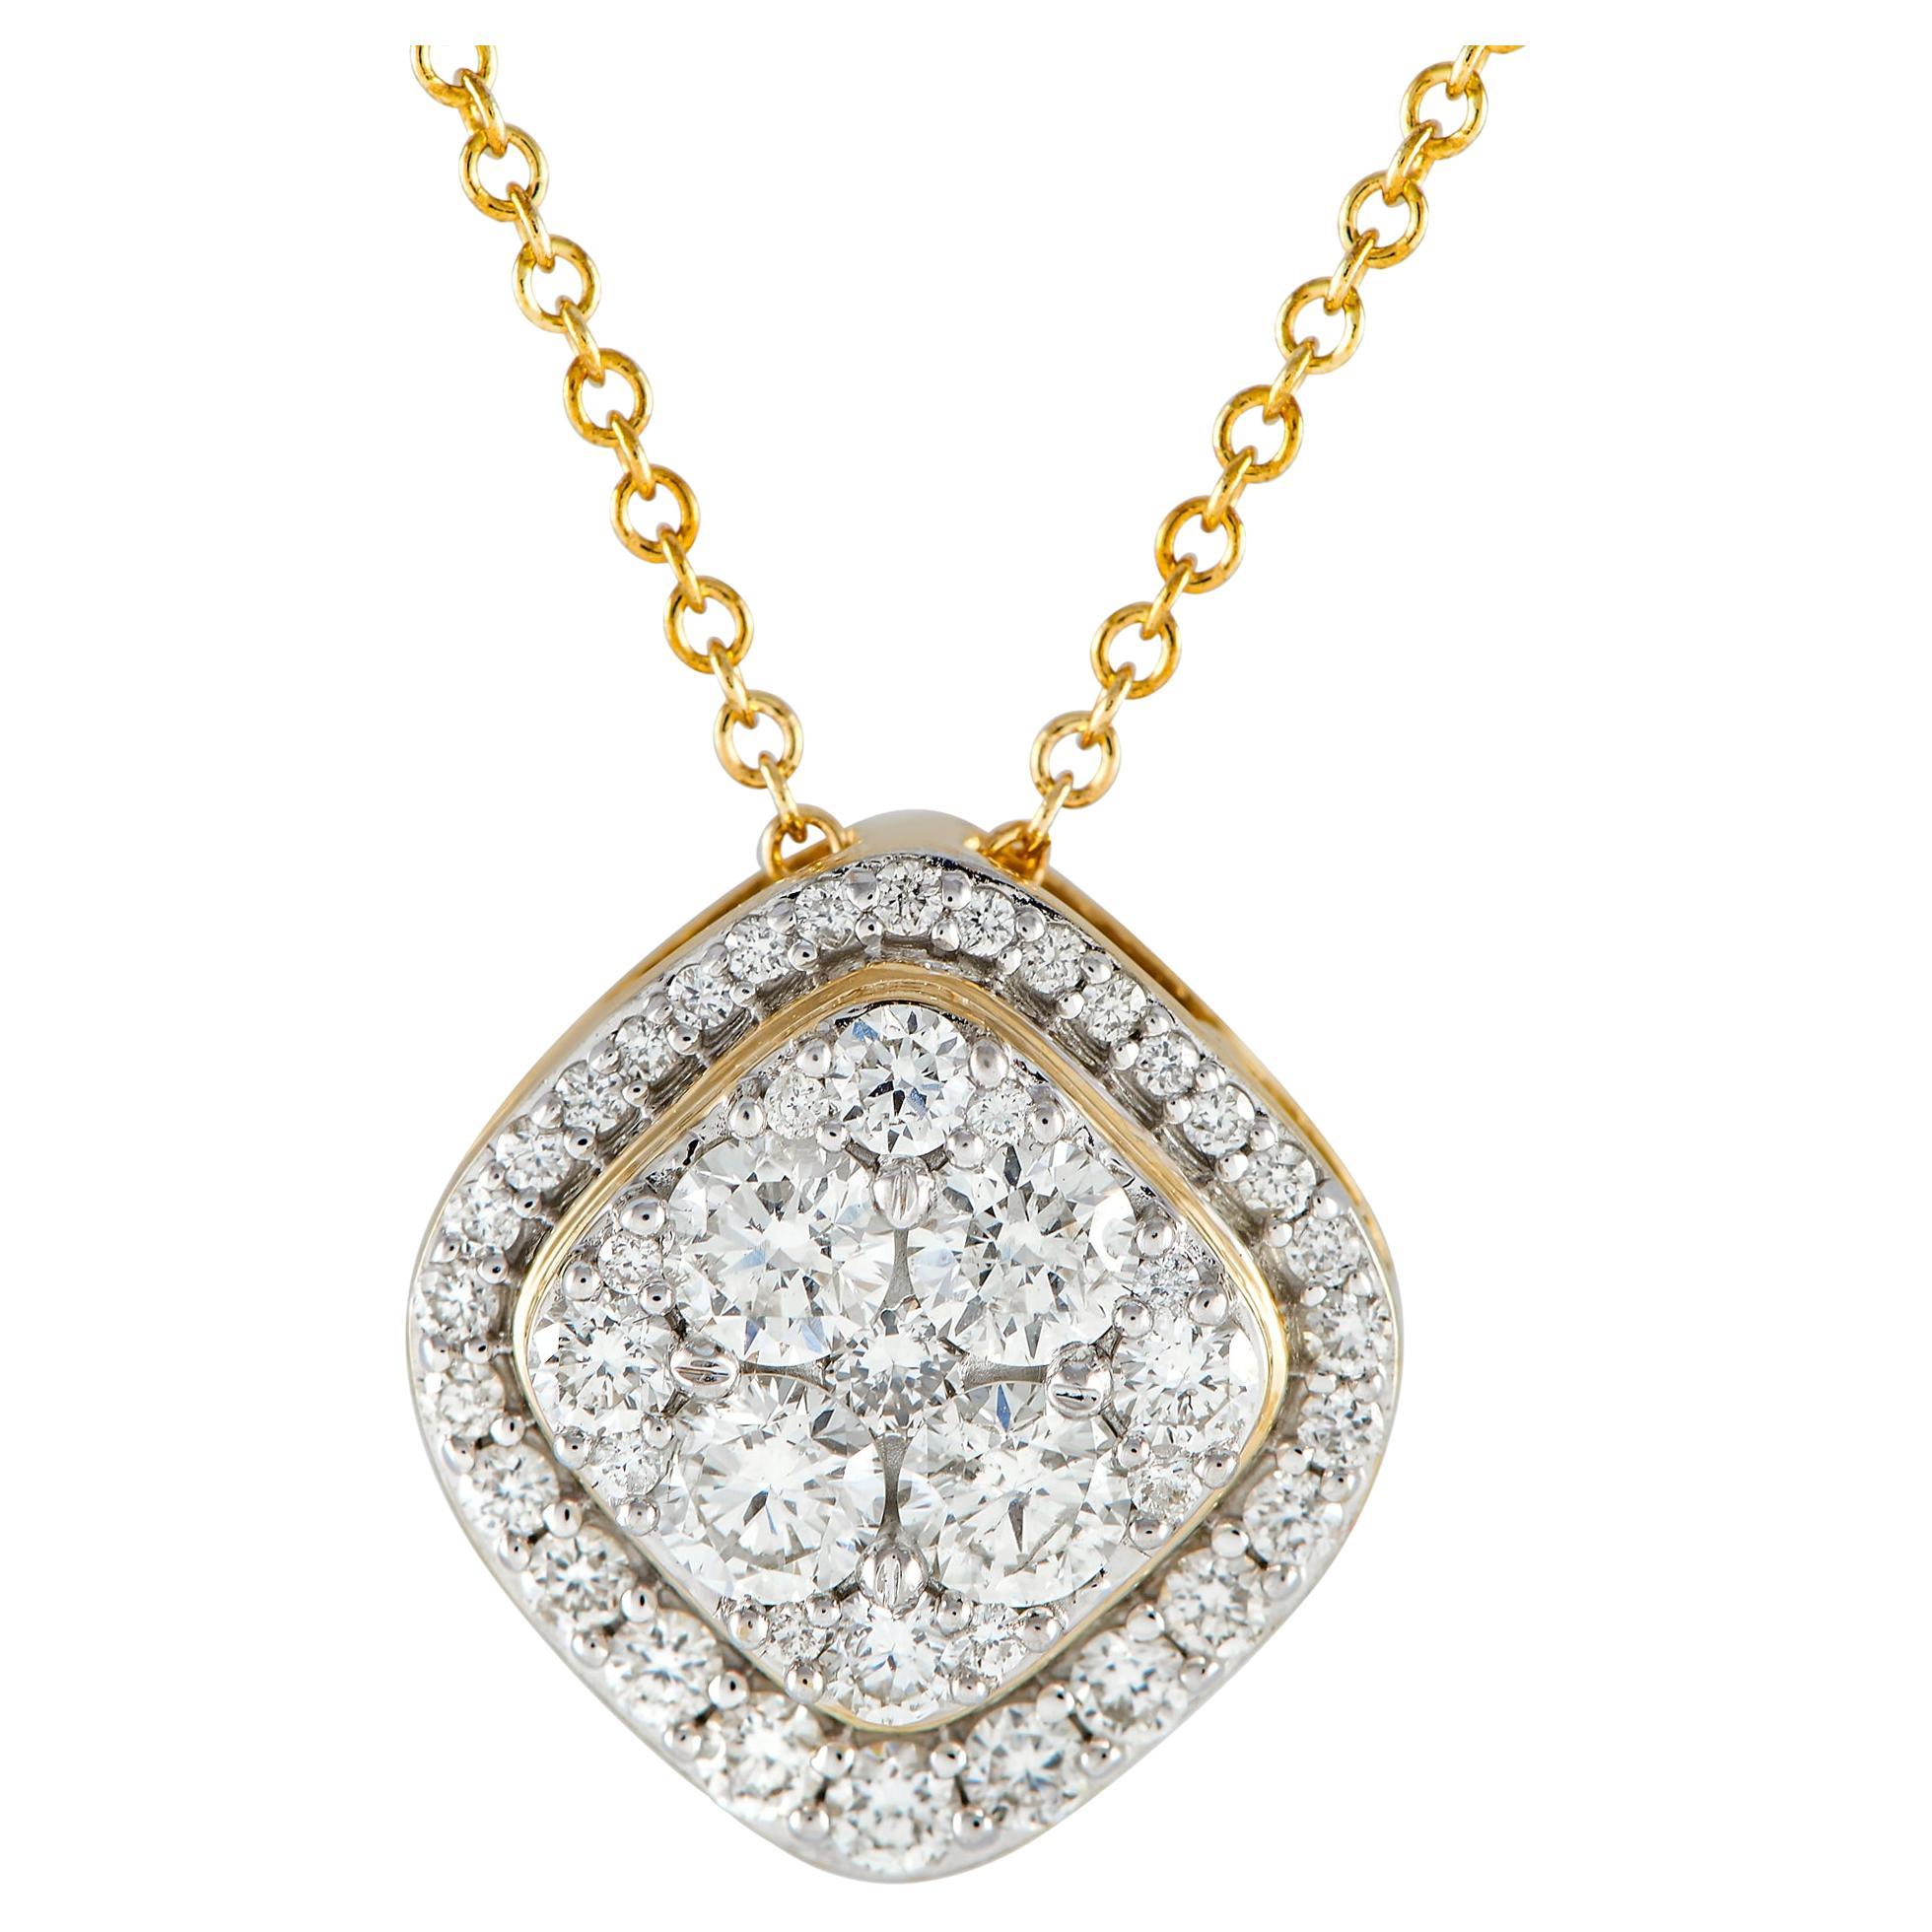 LB Exclusive 14k Yellow Gold 1.0 Carat Diamond Necklace